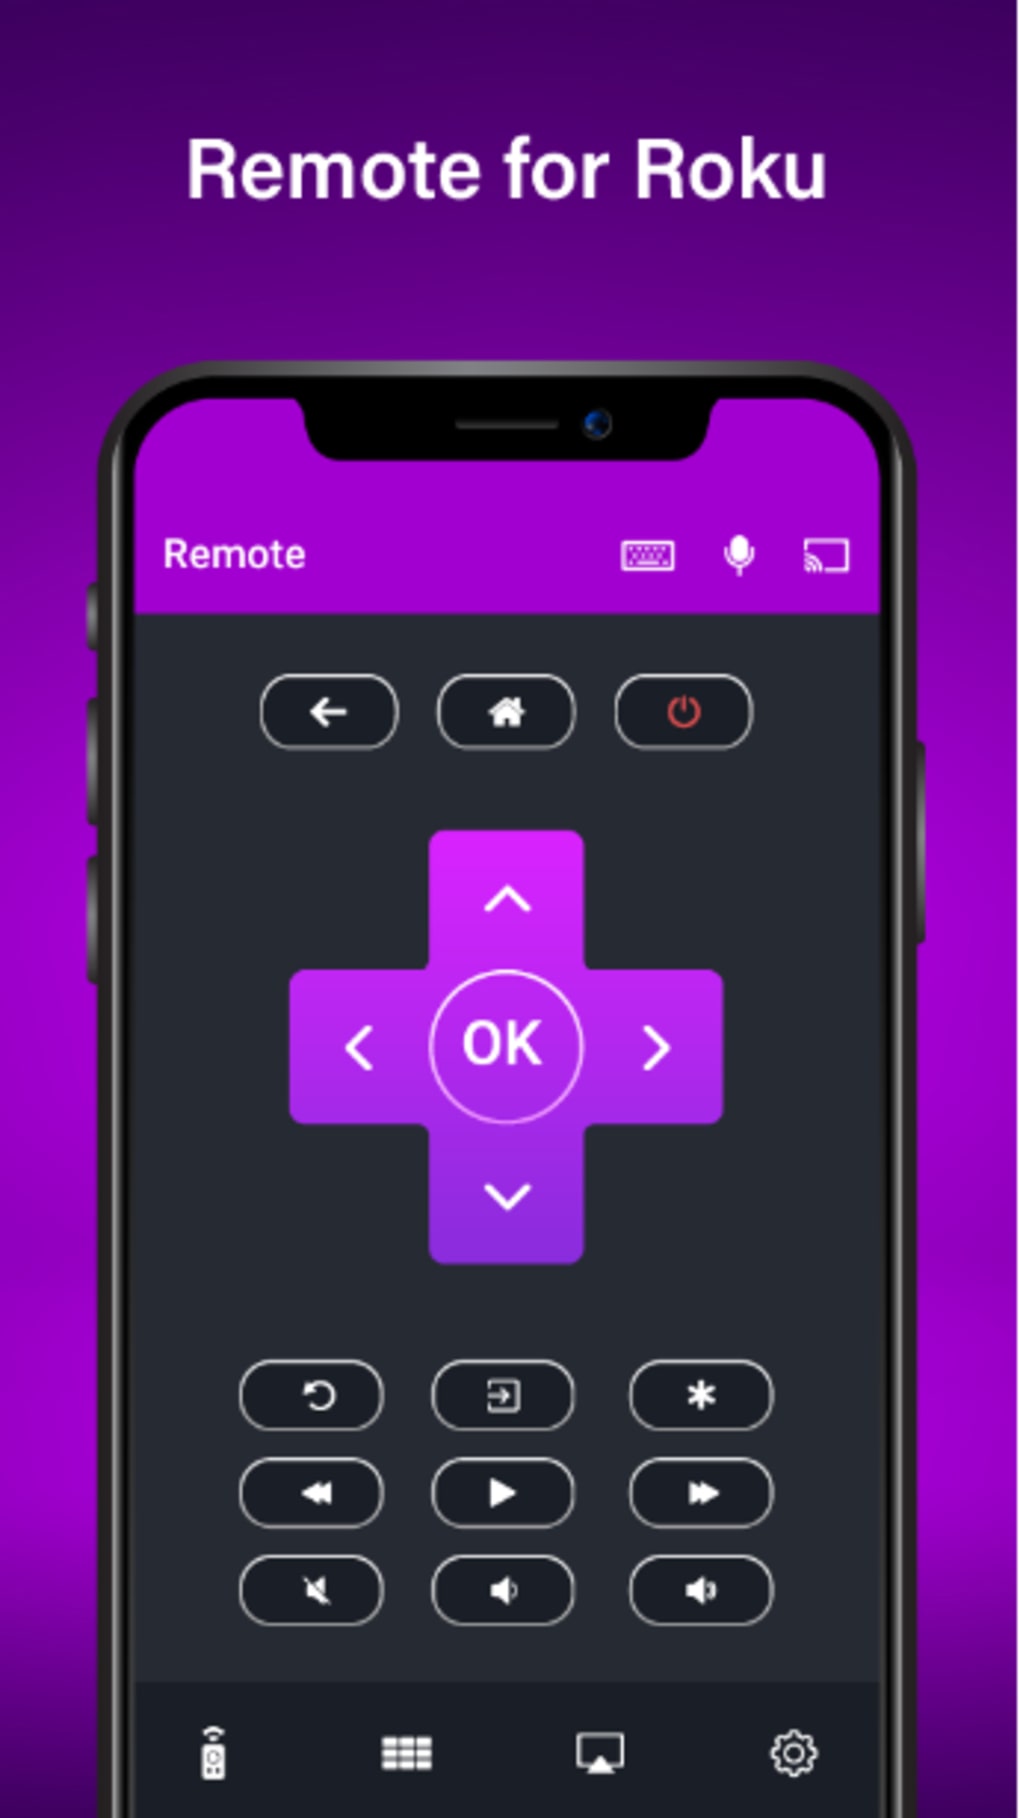 Roku Remote Control for TV APK für Android - Download